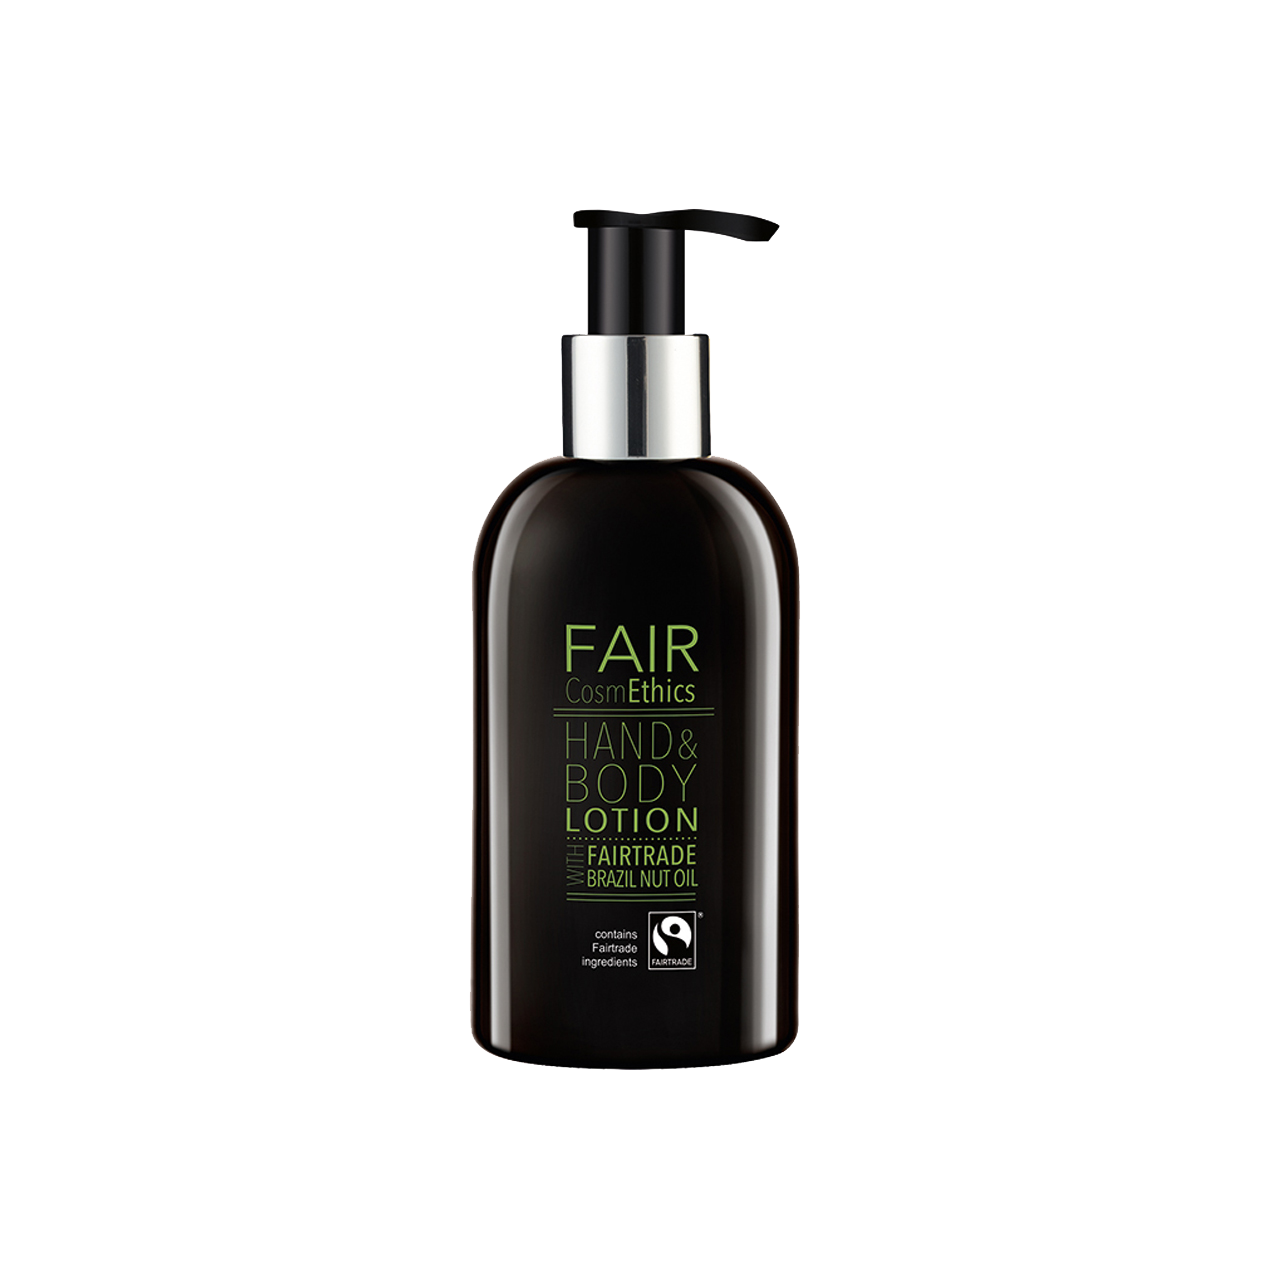 FAIR CosmEthics Fairtrade, Hand & Body Lotion in Pump Dispenser, 300ml